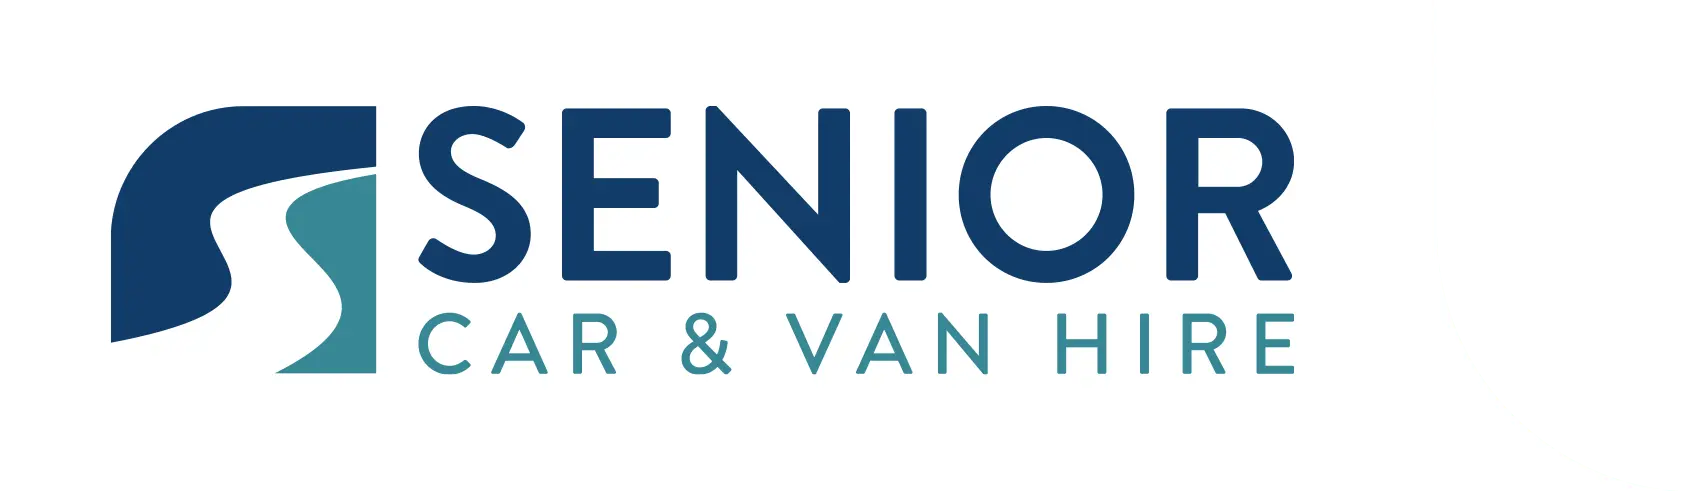 Senior Car & Van Hire logo